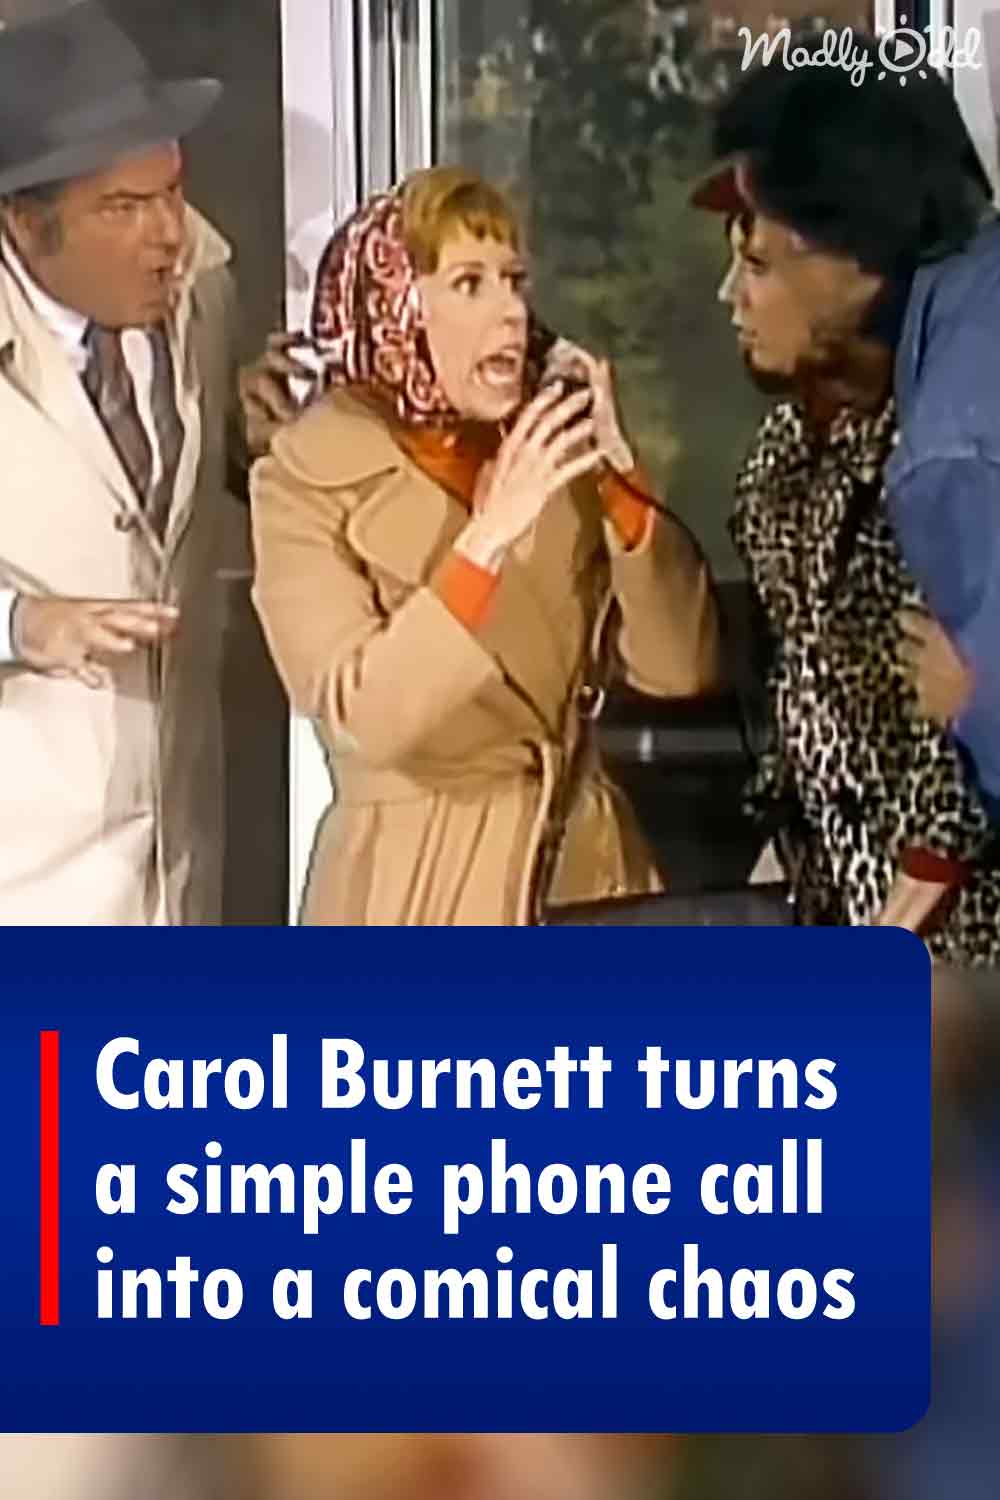 Carol Burnett turns a simple phone call into a comical chaos